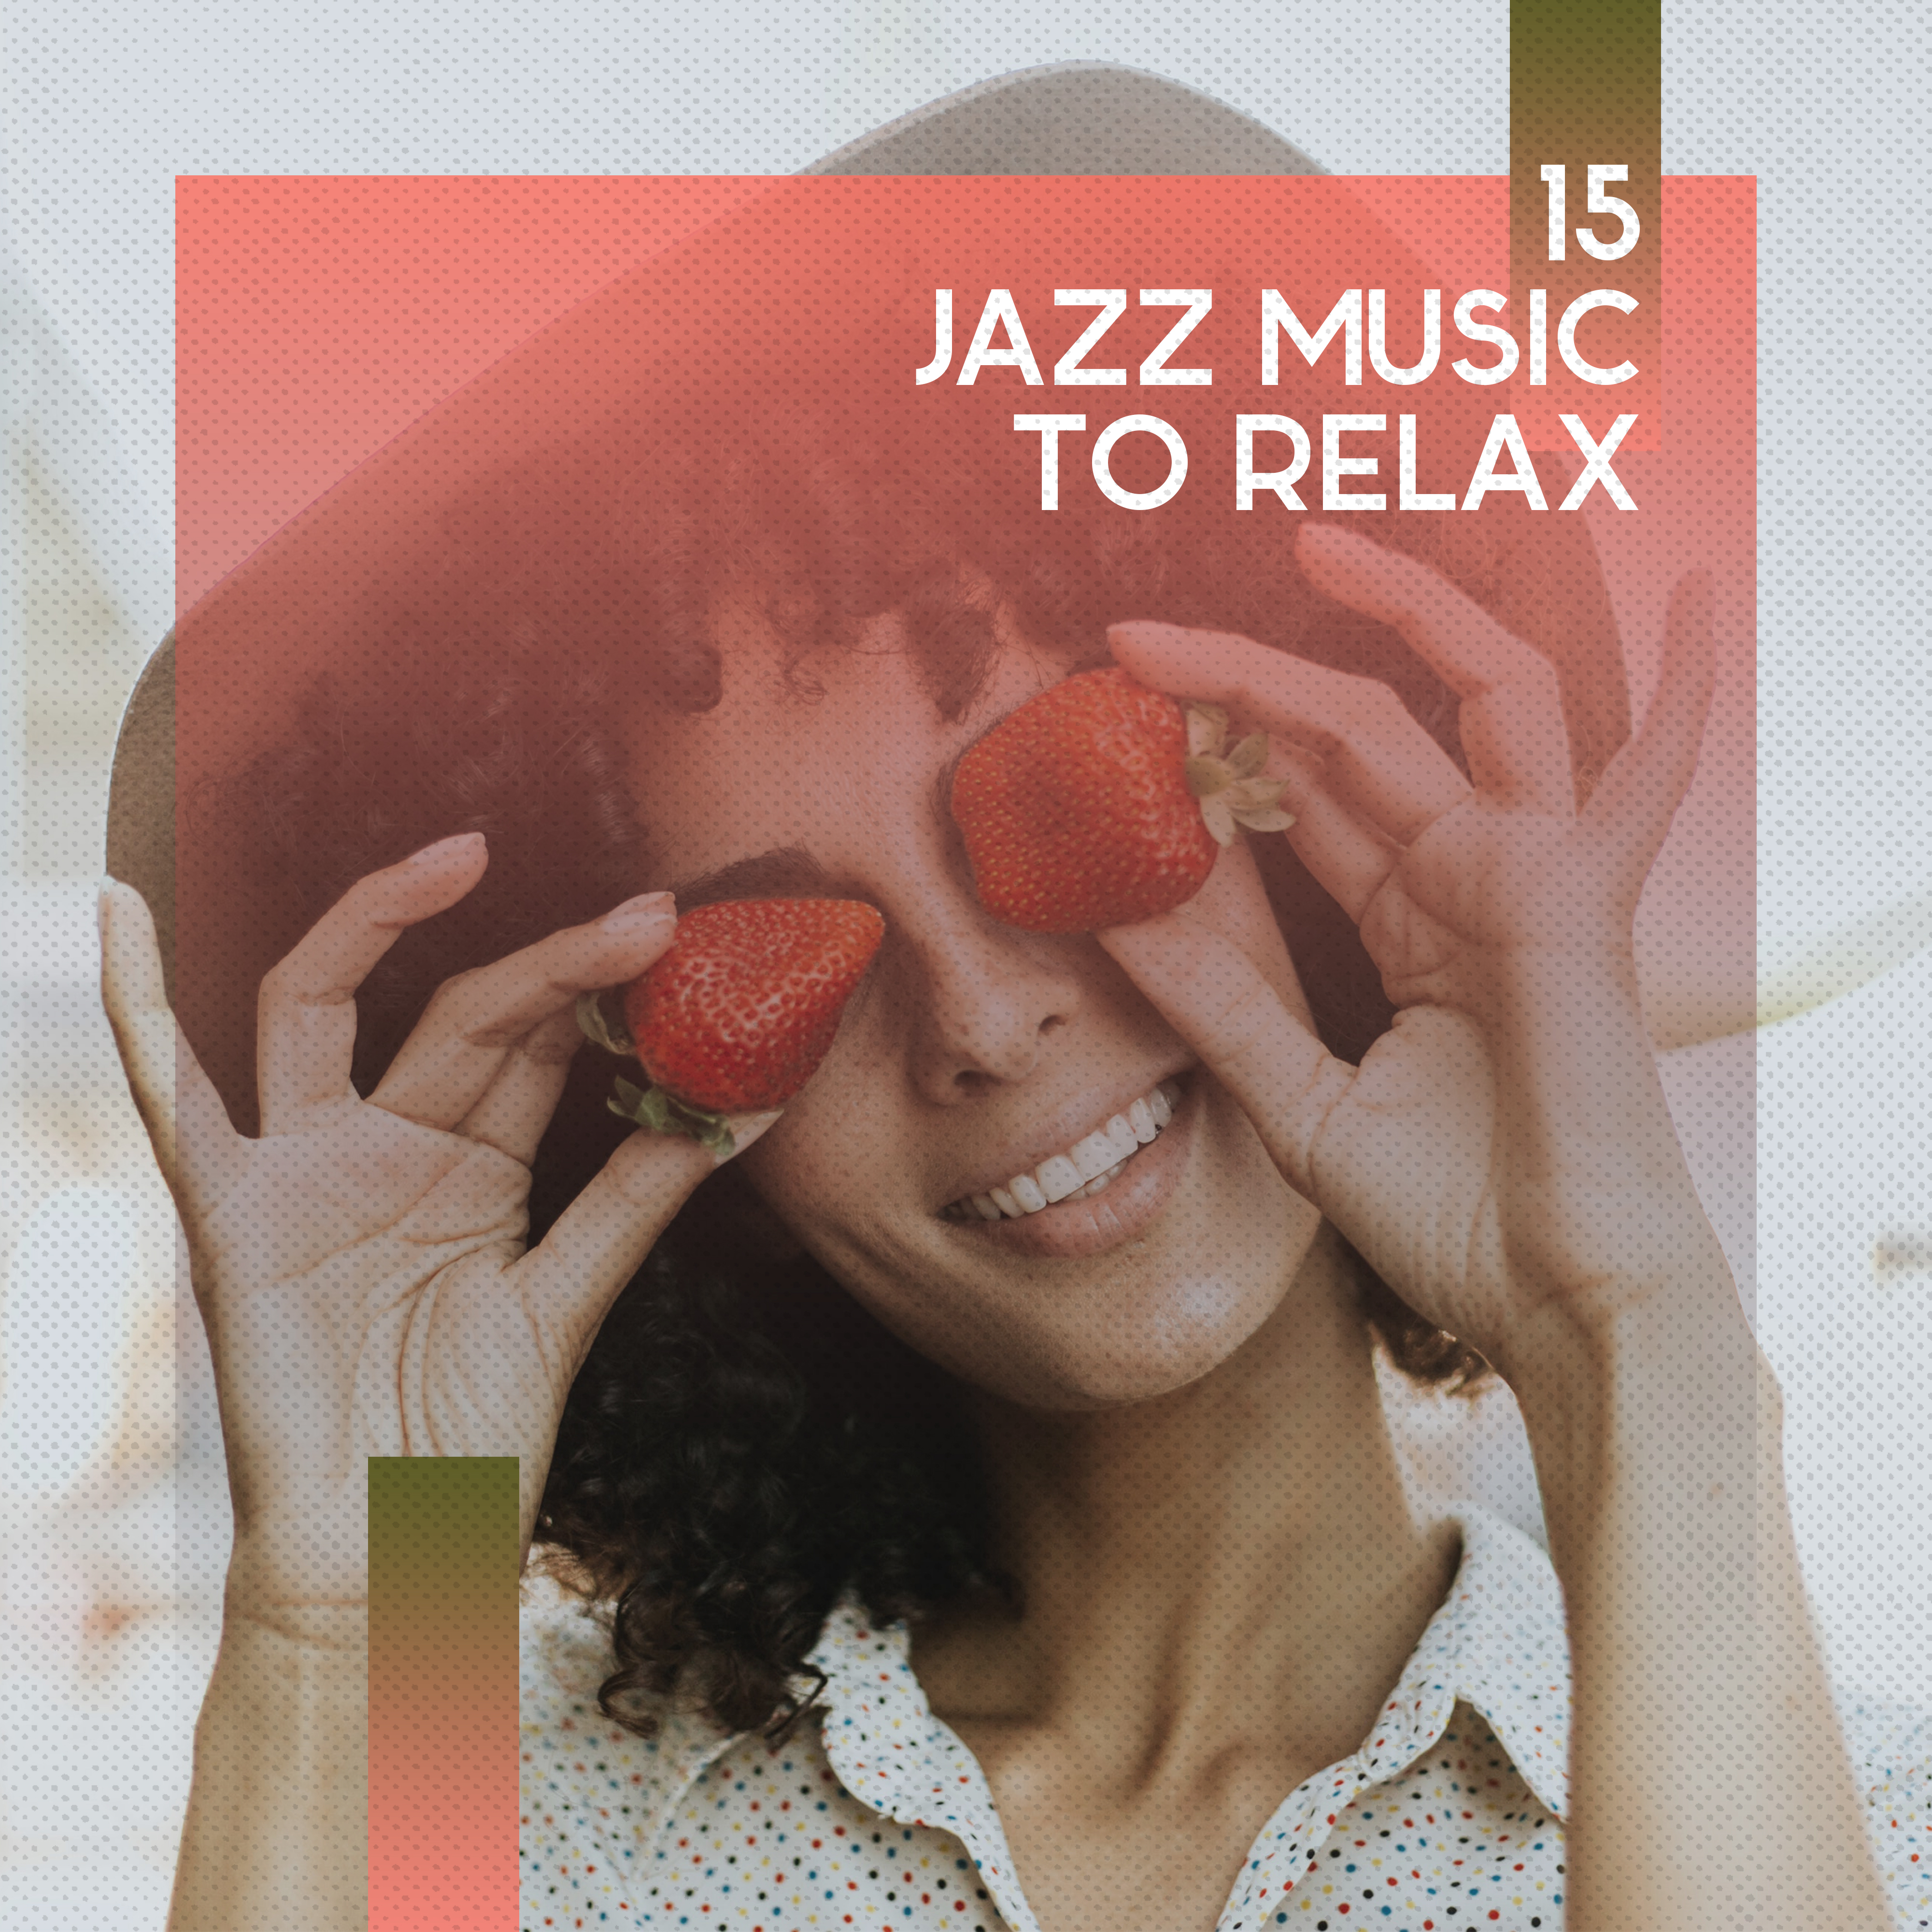 15 Jazz Music to Relax